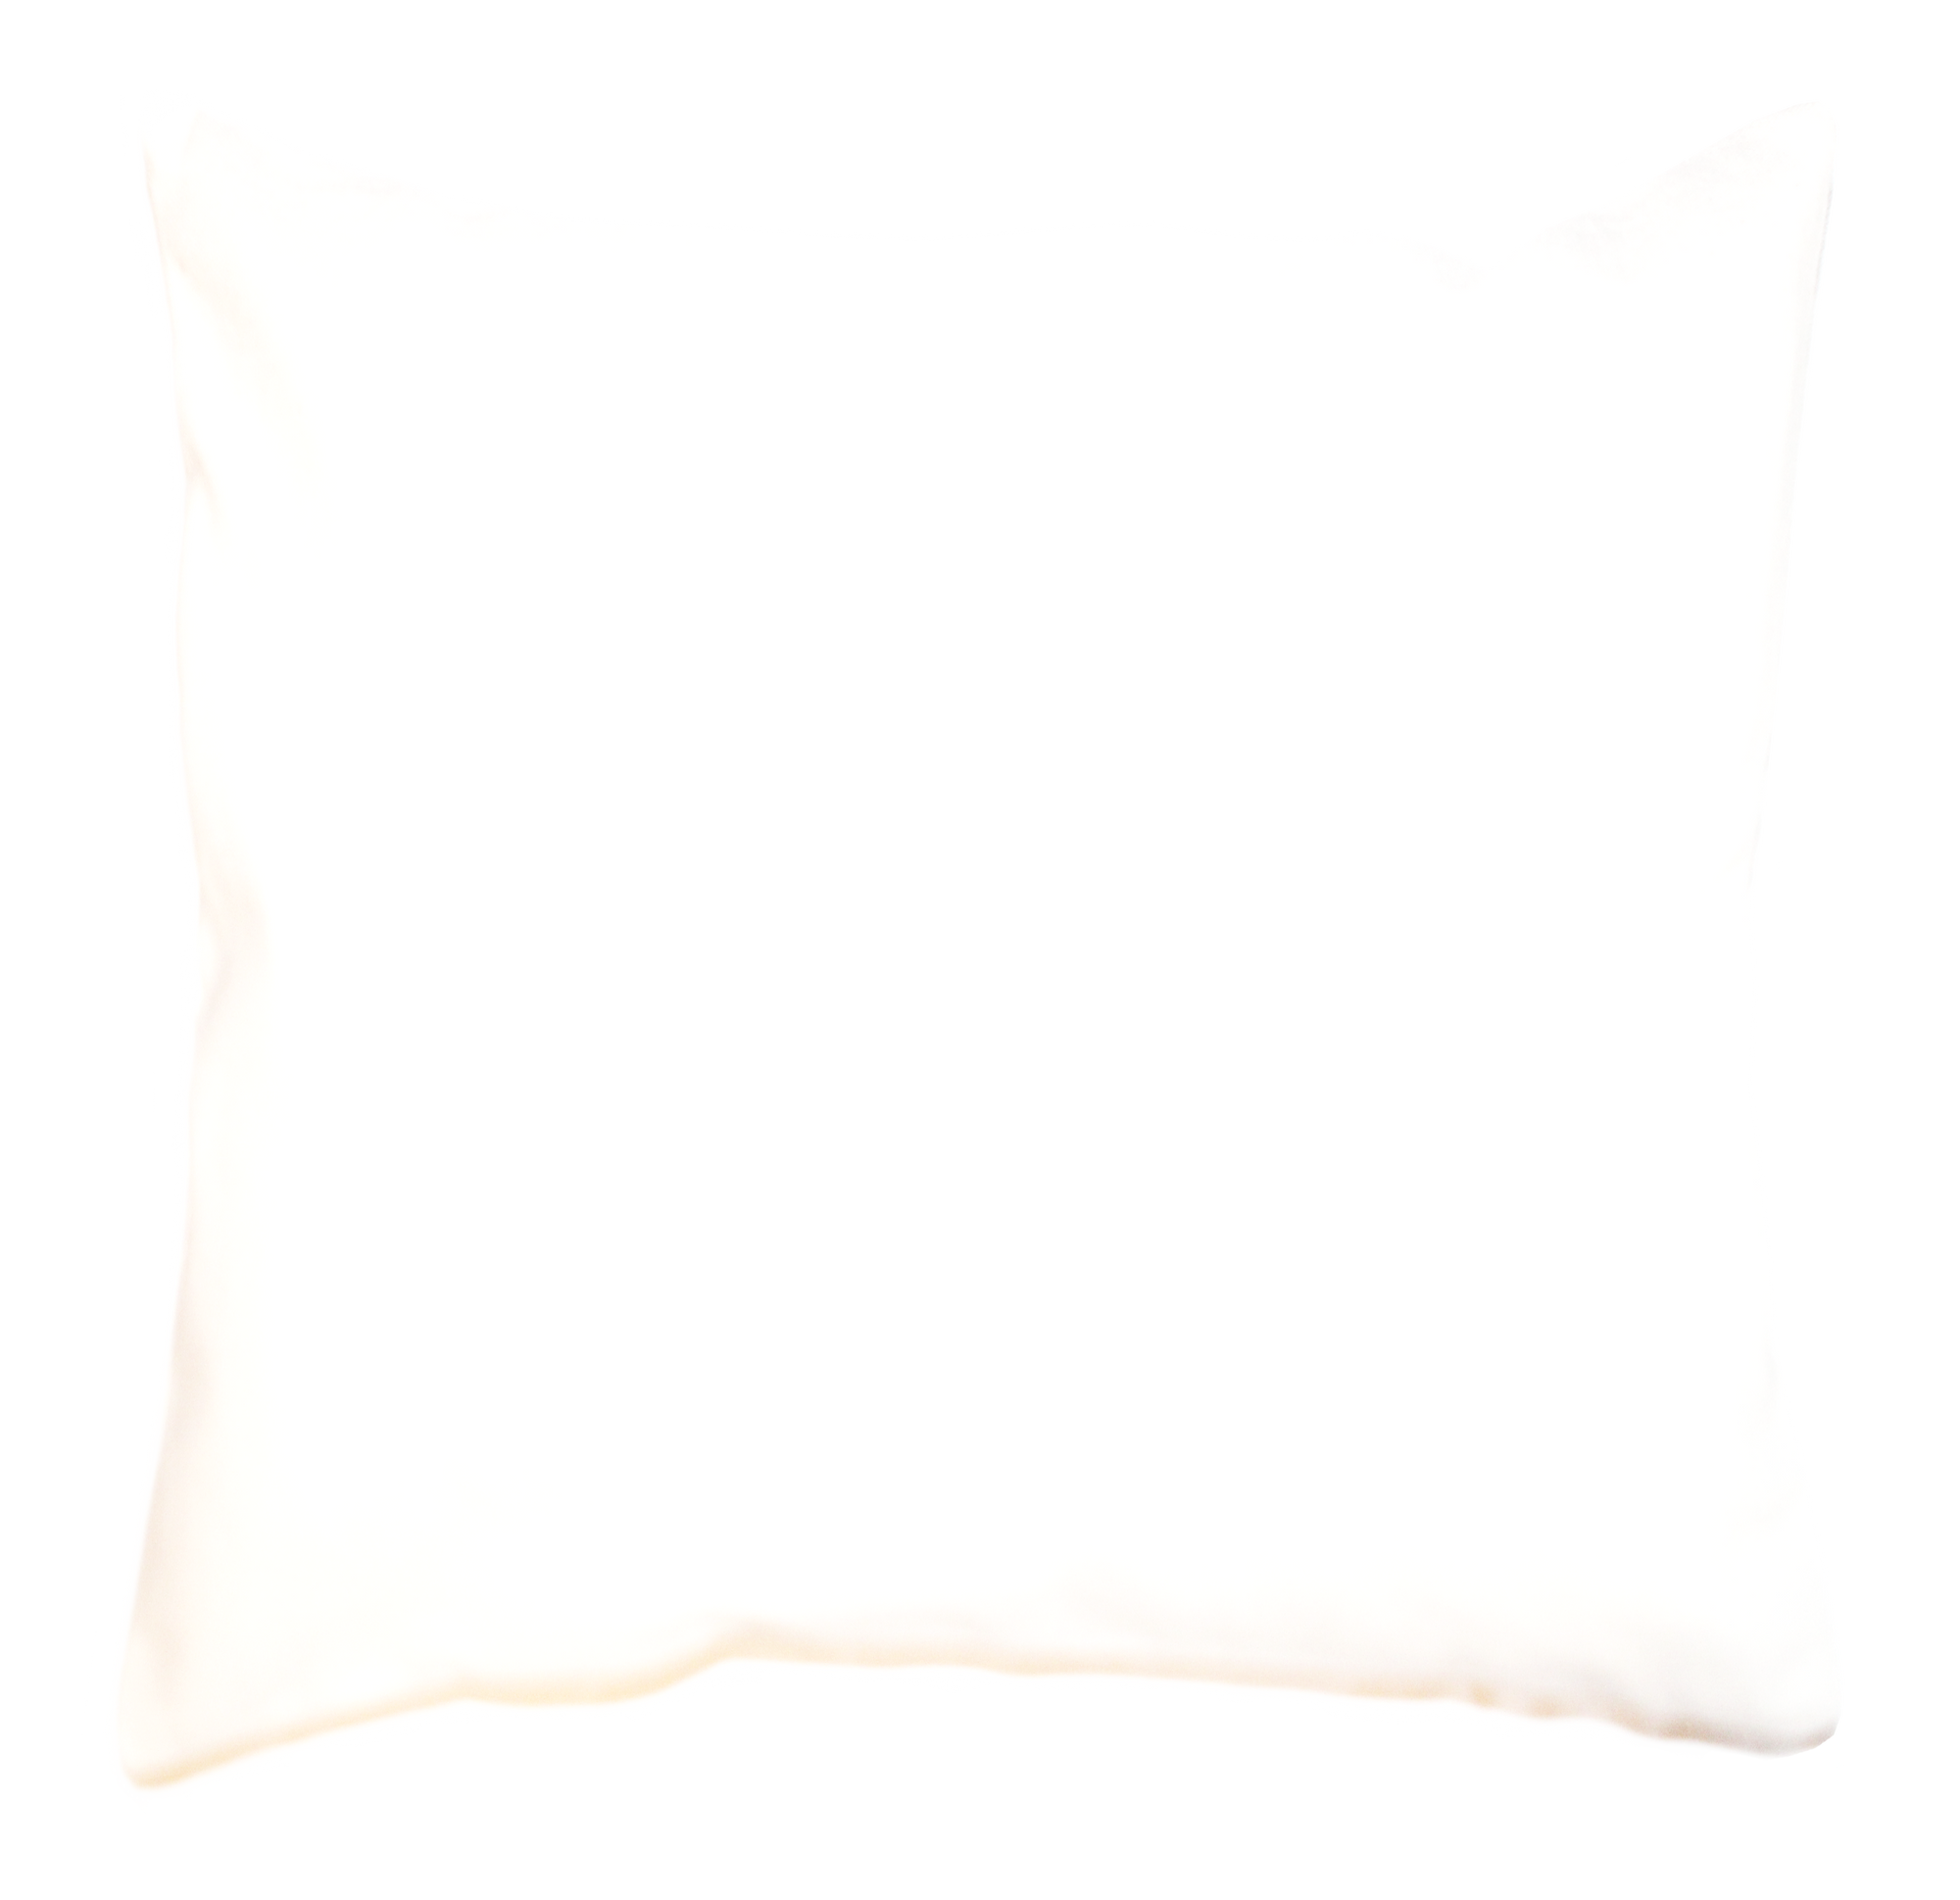 02748 dartmouth zip code square pillow